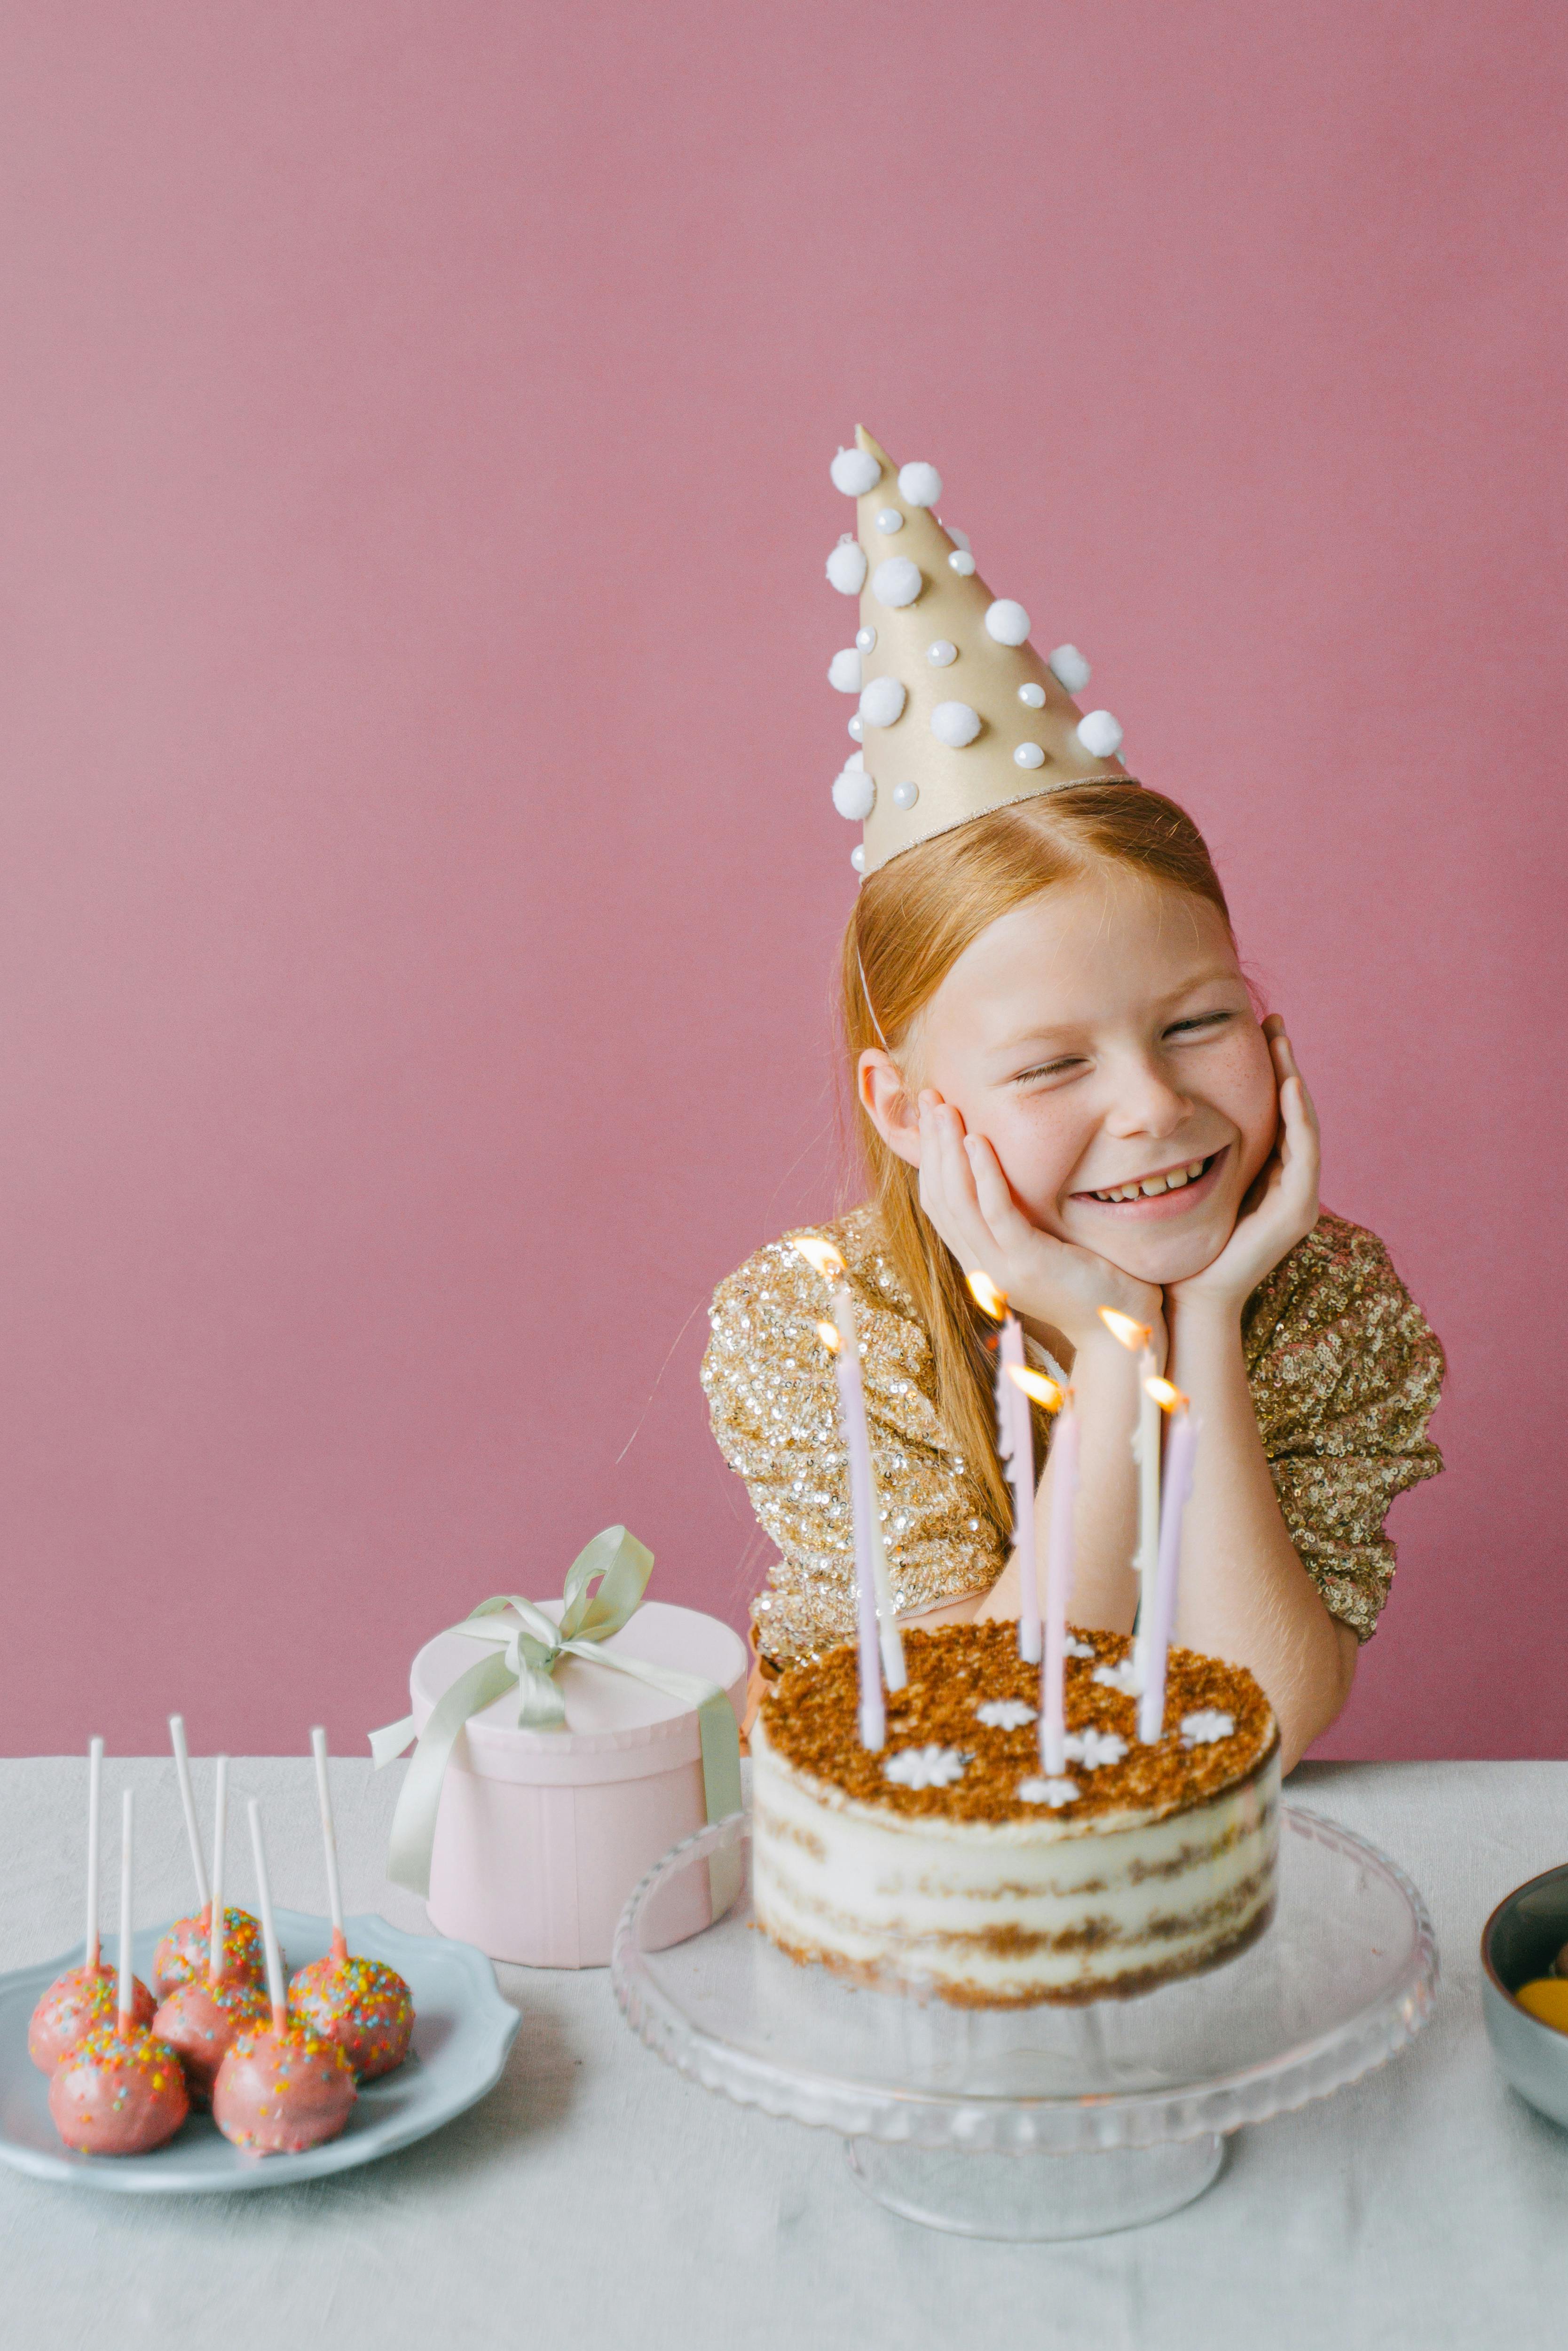 A little girl celebrating her birthday | Source: Pexels